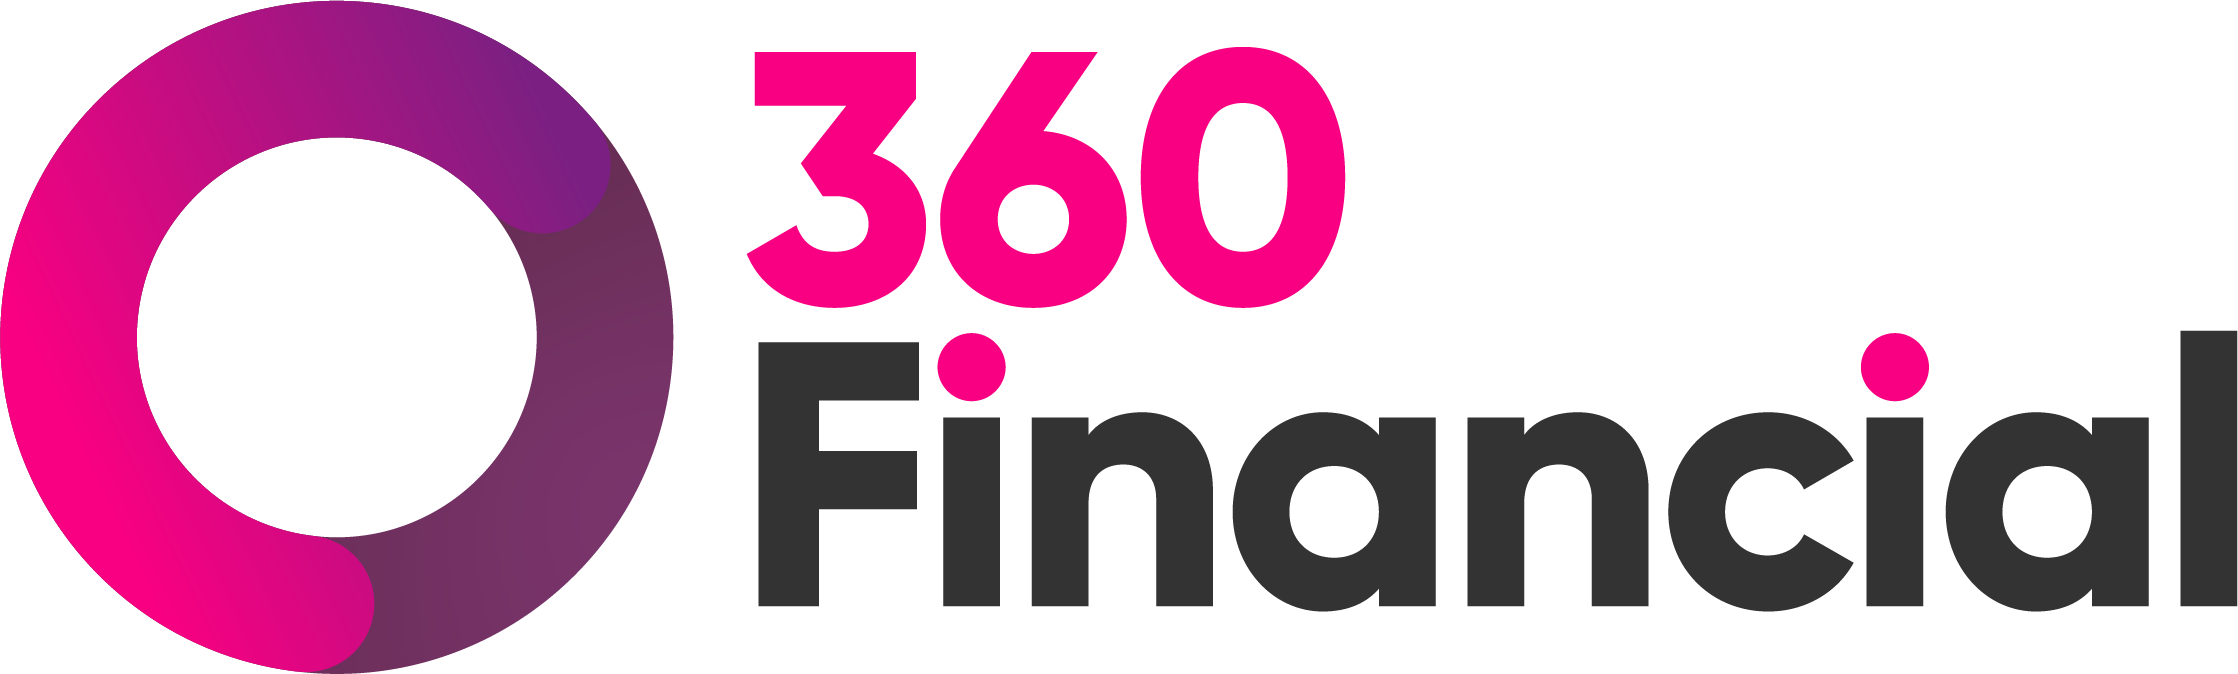 360 financial logo black